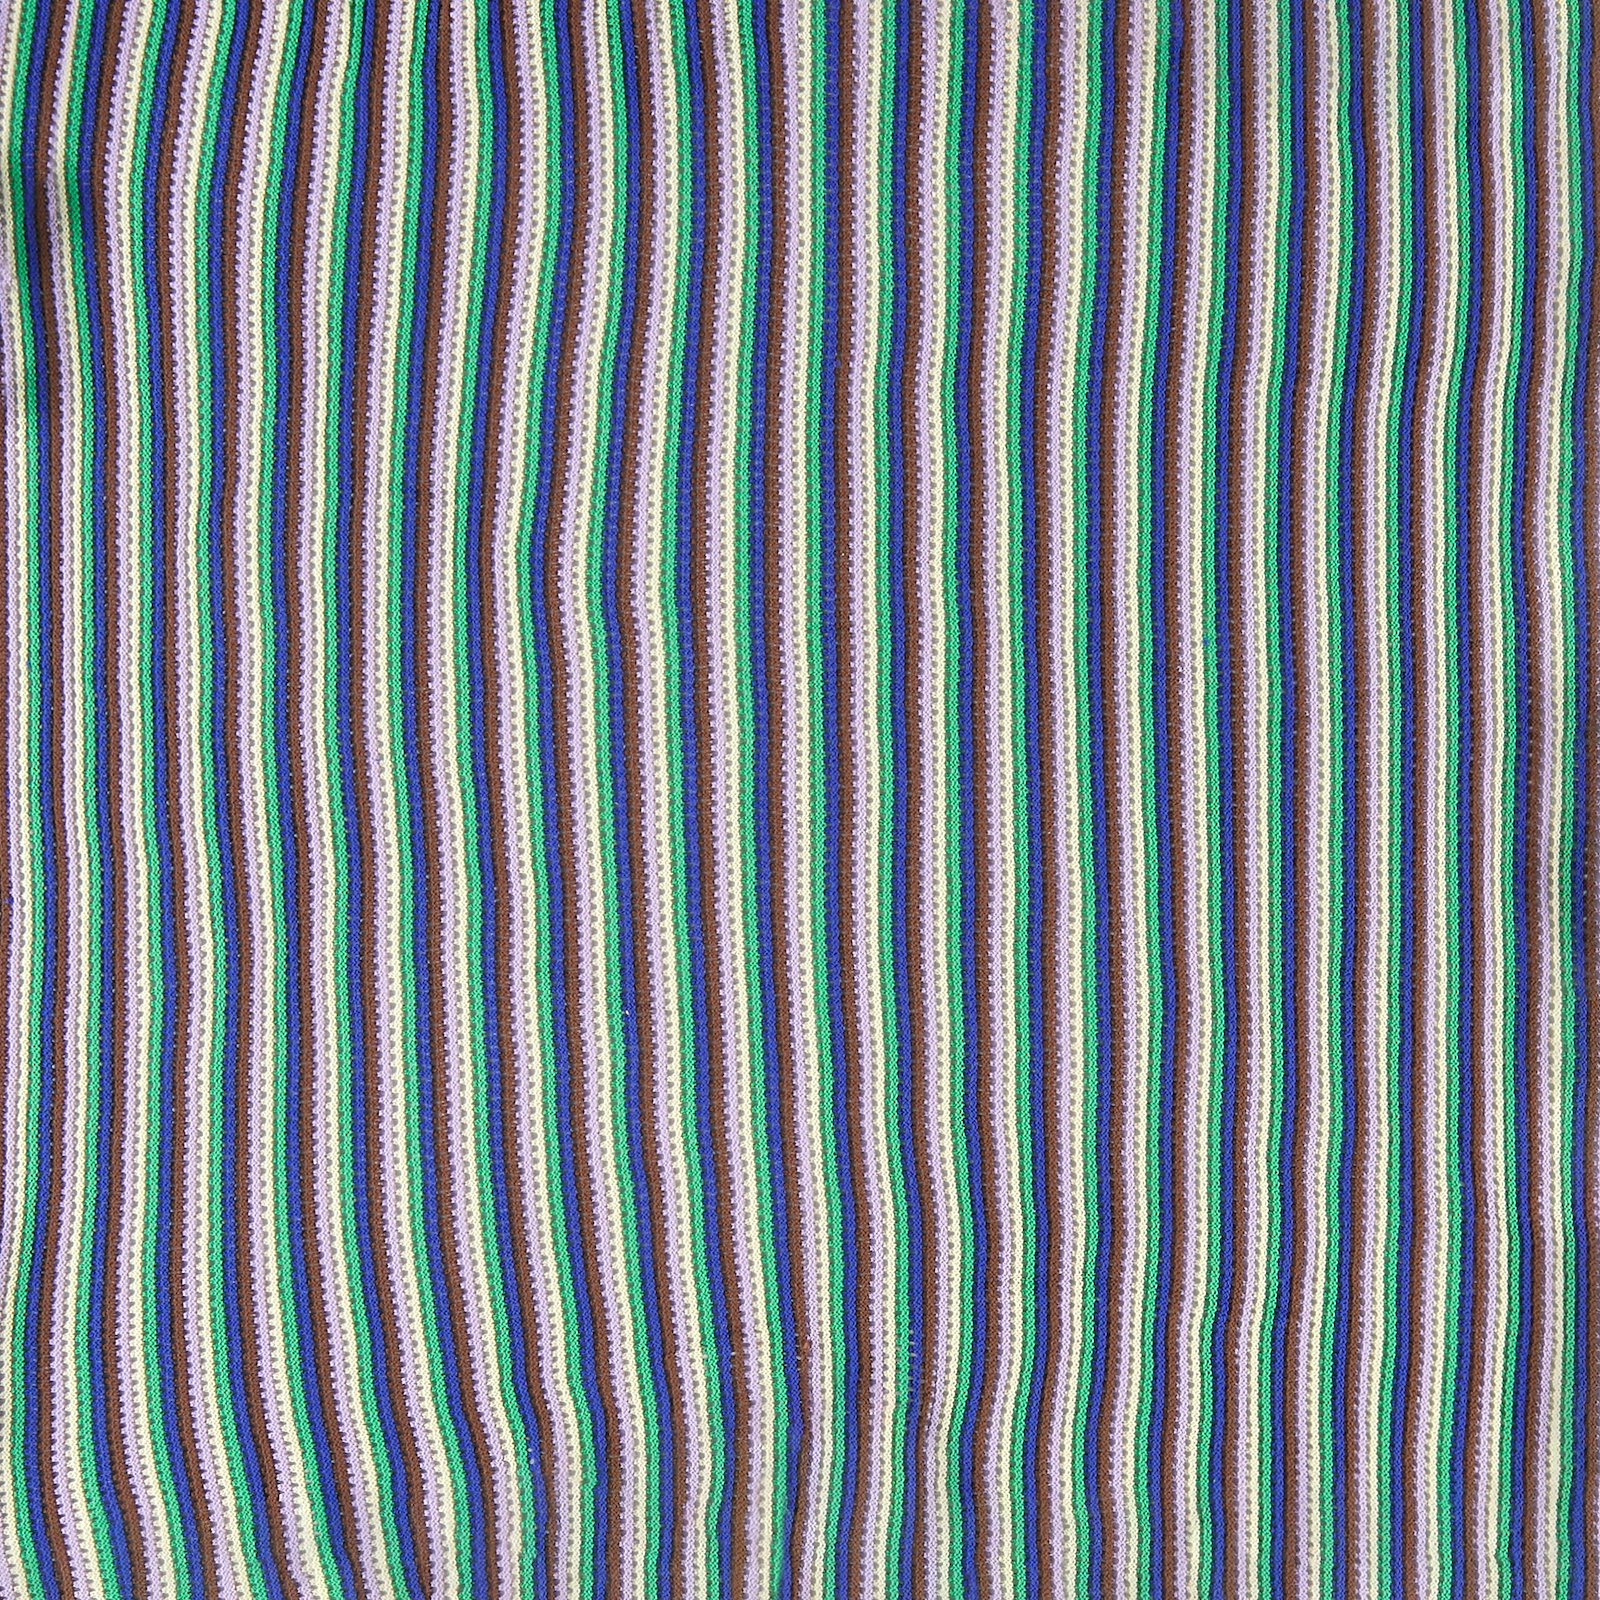 Crochet look w multicolored YD stripes 240502_pack_sp